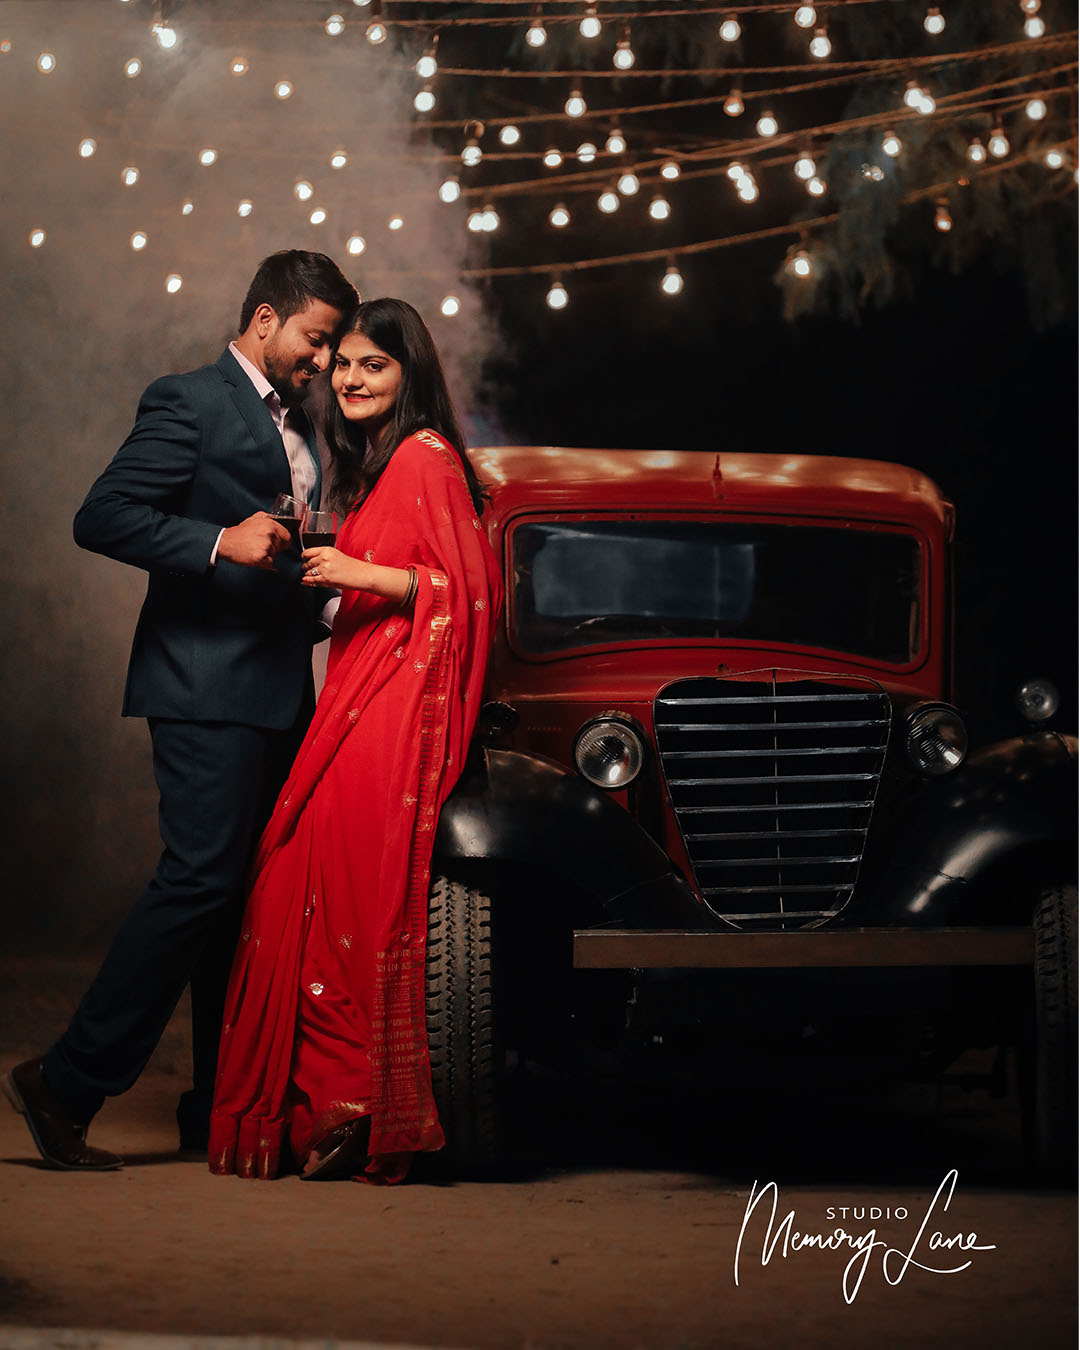 Top pre-wedding photographers Chandigarh | Cheers to happiness!